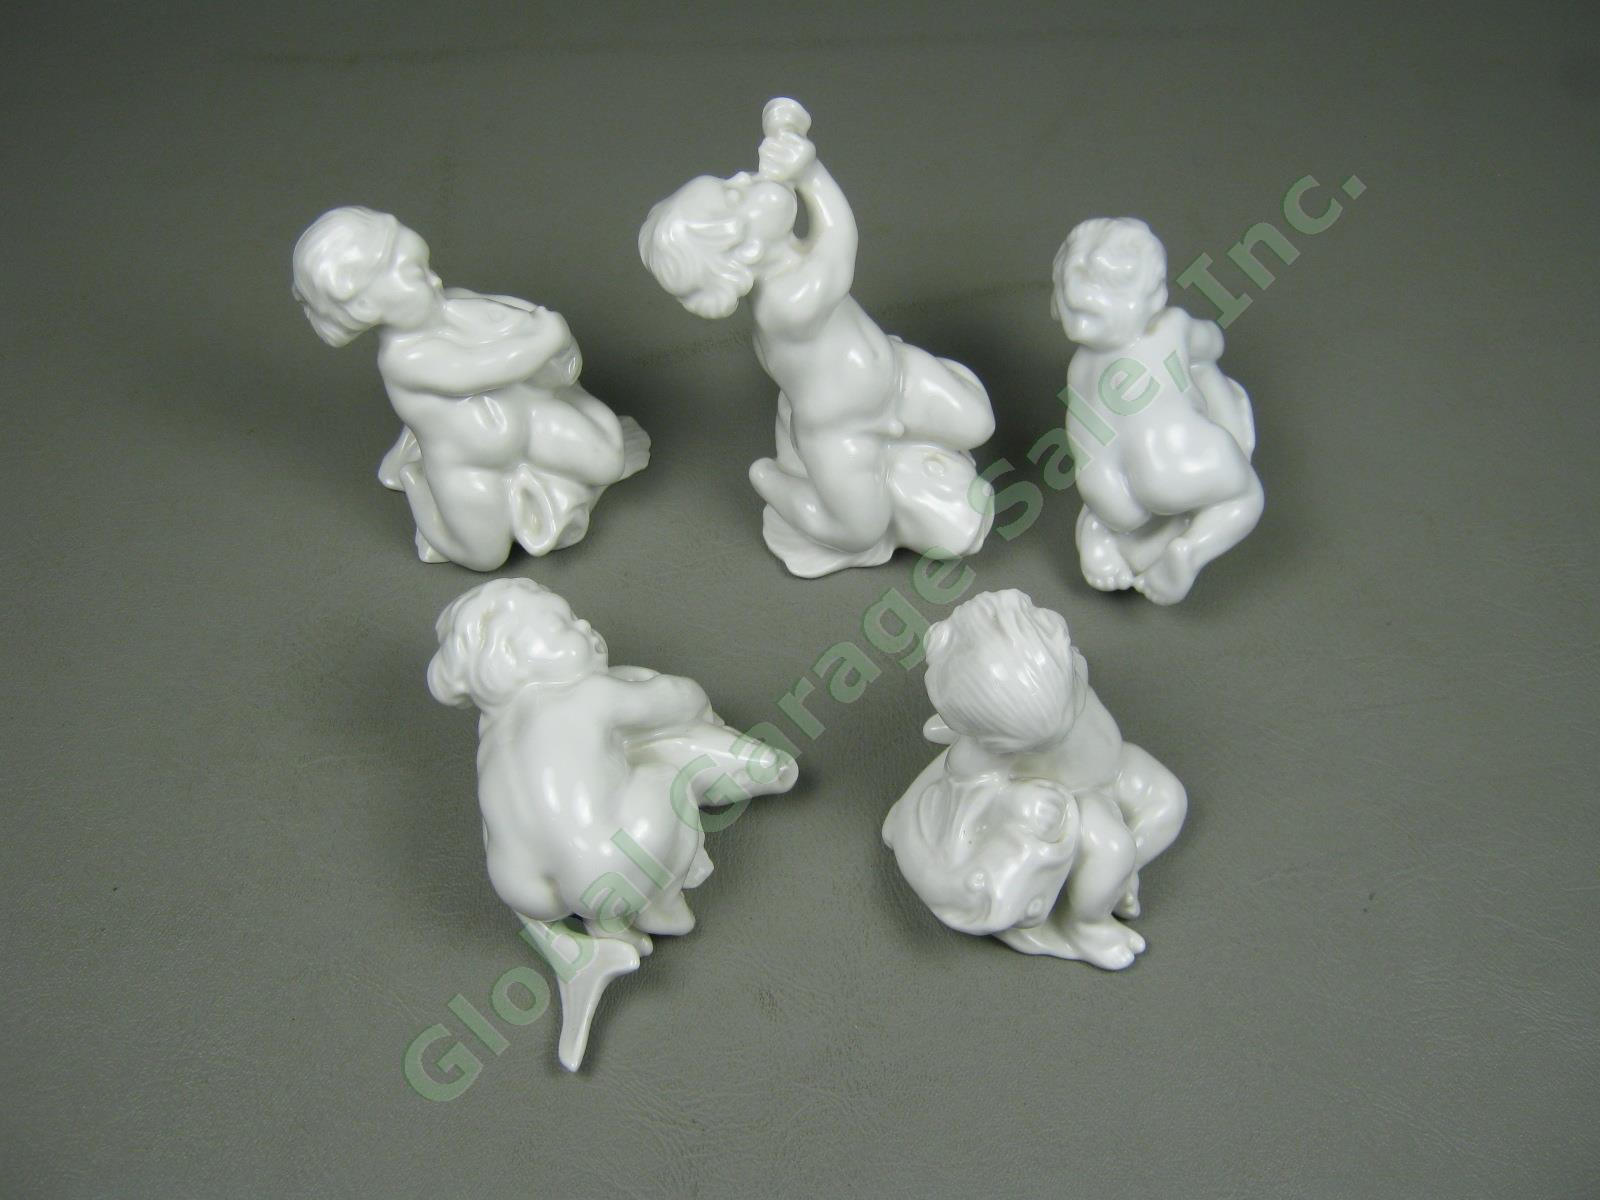 5 Bing Grondahl Kai Nielsen White Porcelain Blanc De Chine Boy Fish Figurine Set 2